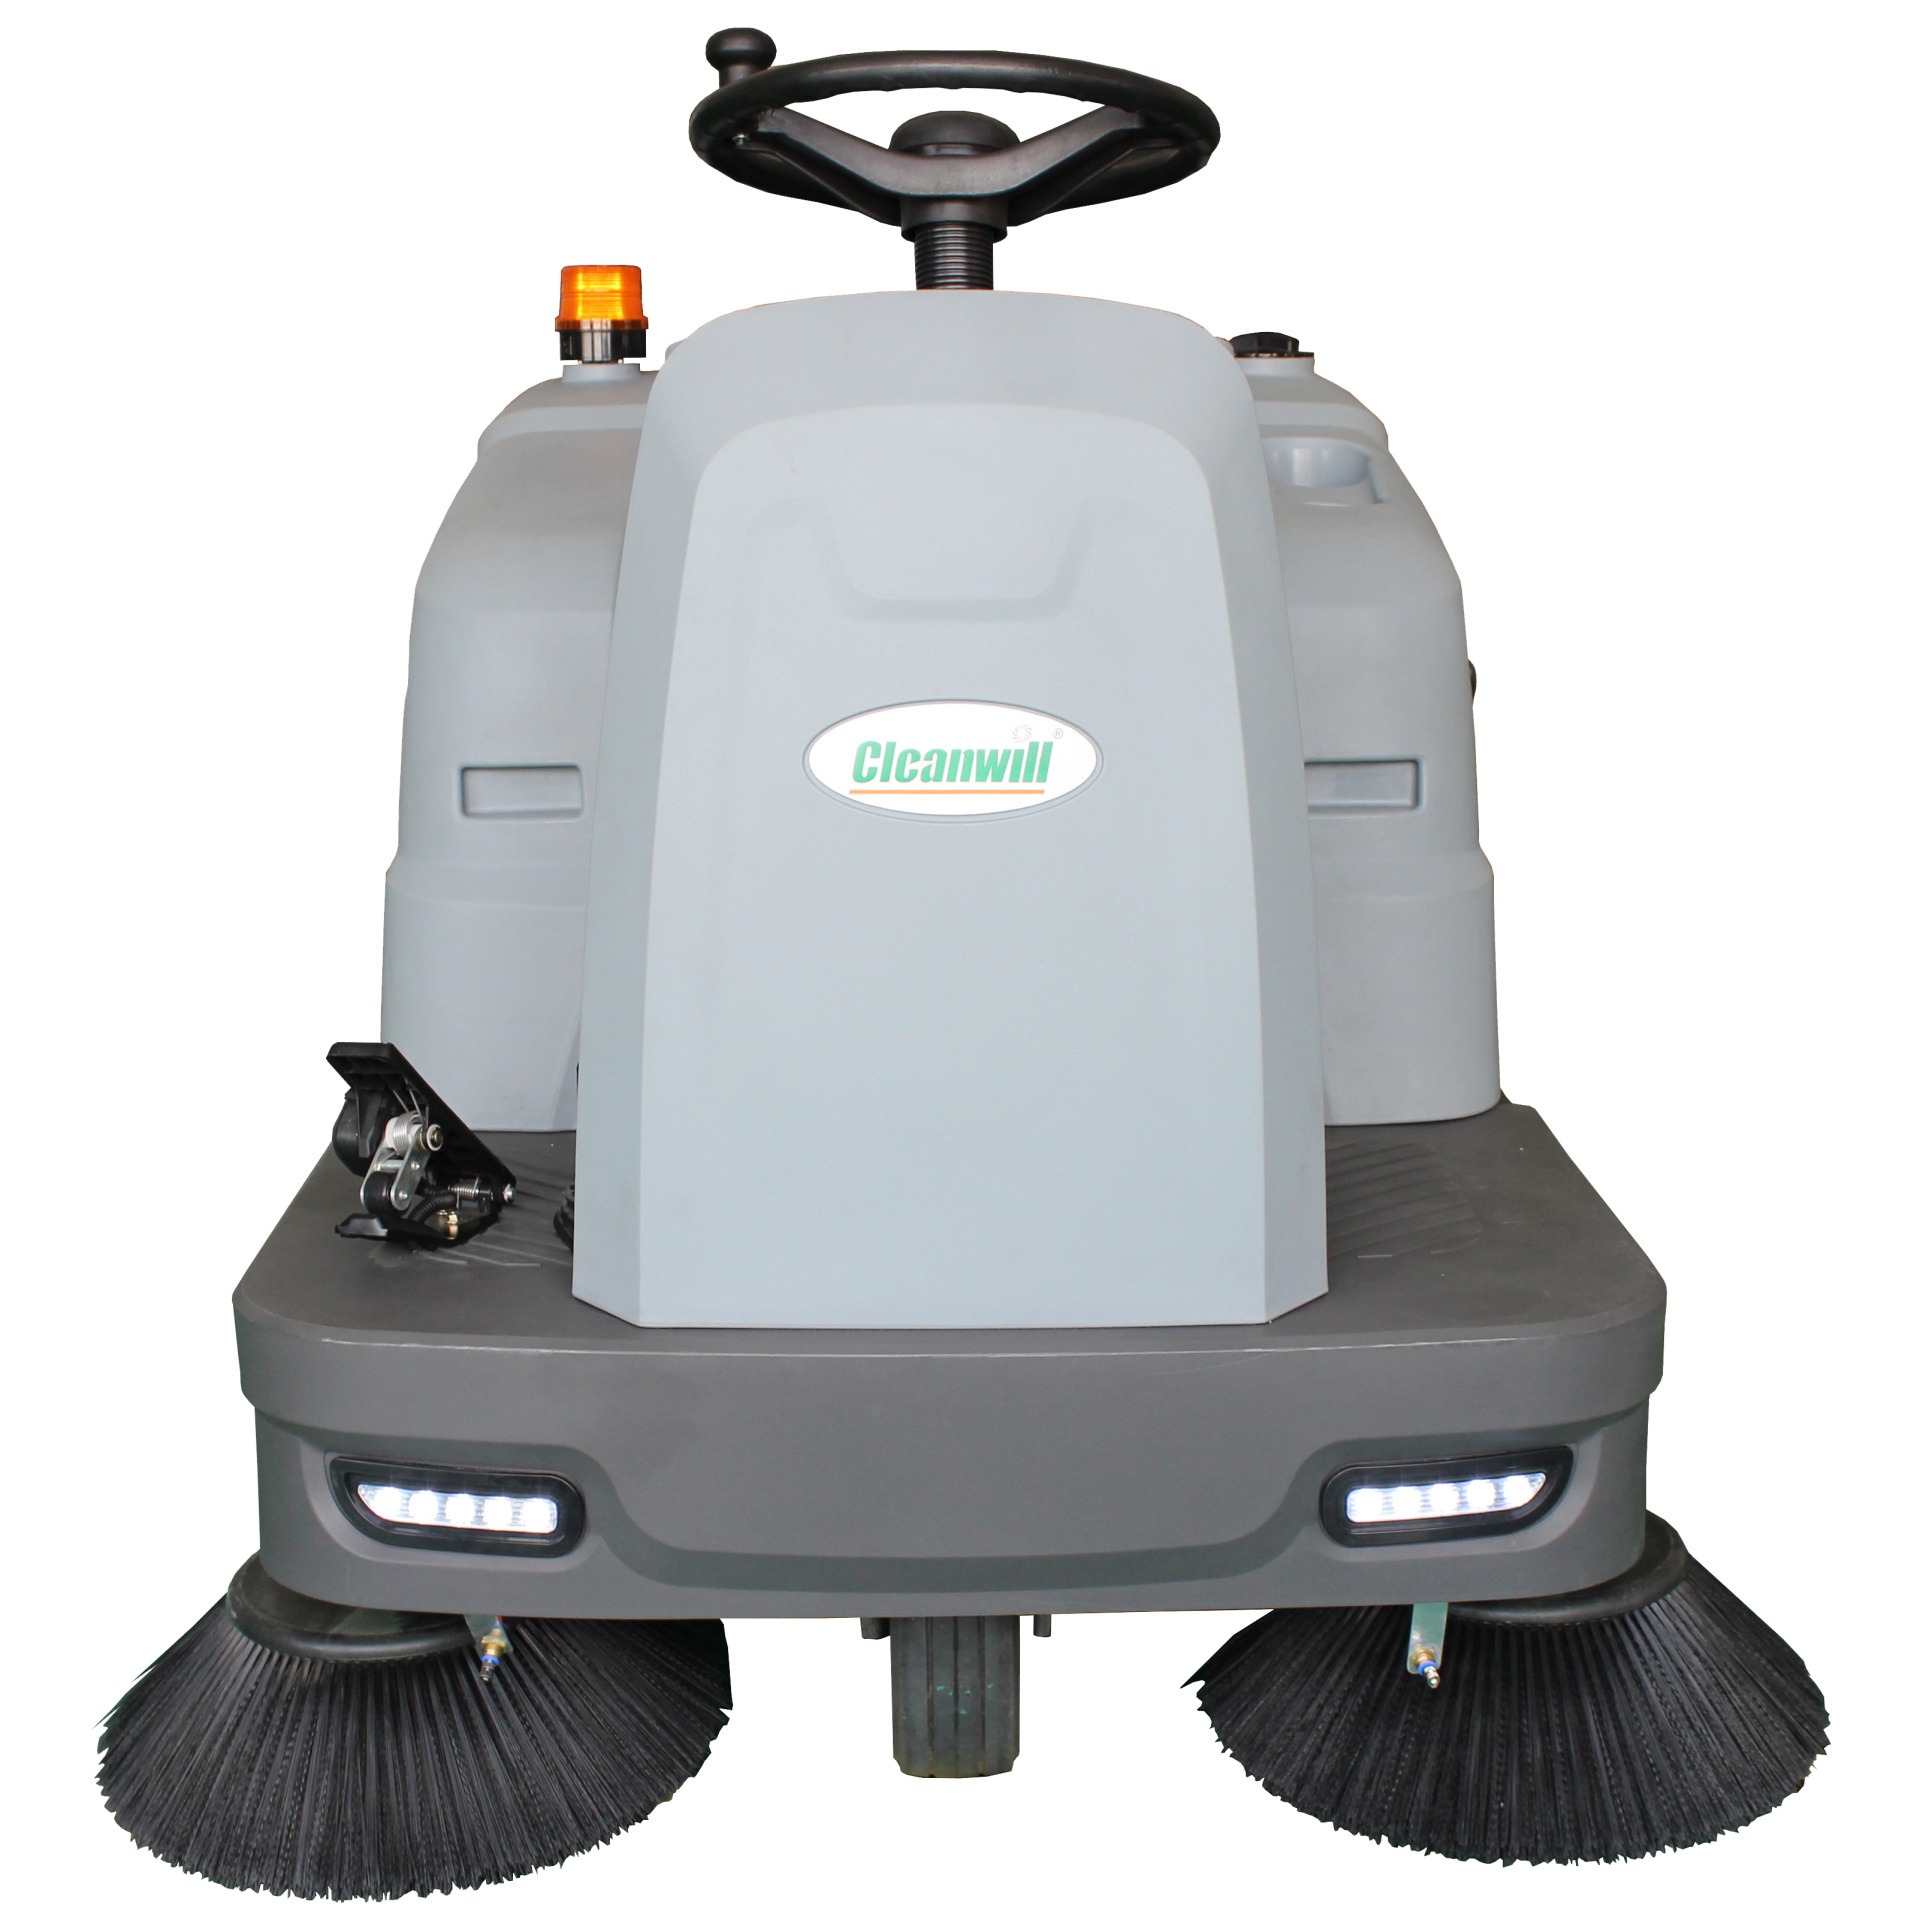 cleanwill/克力威 TANK5 电动驾驶扫地车 扫地车 多功能扫地车 电动扫地车 道路扫地车图片